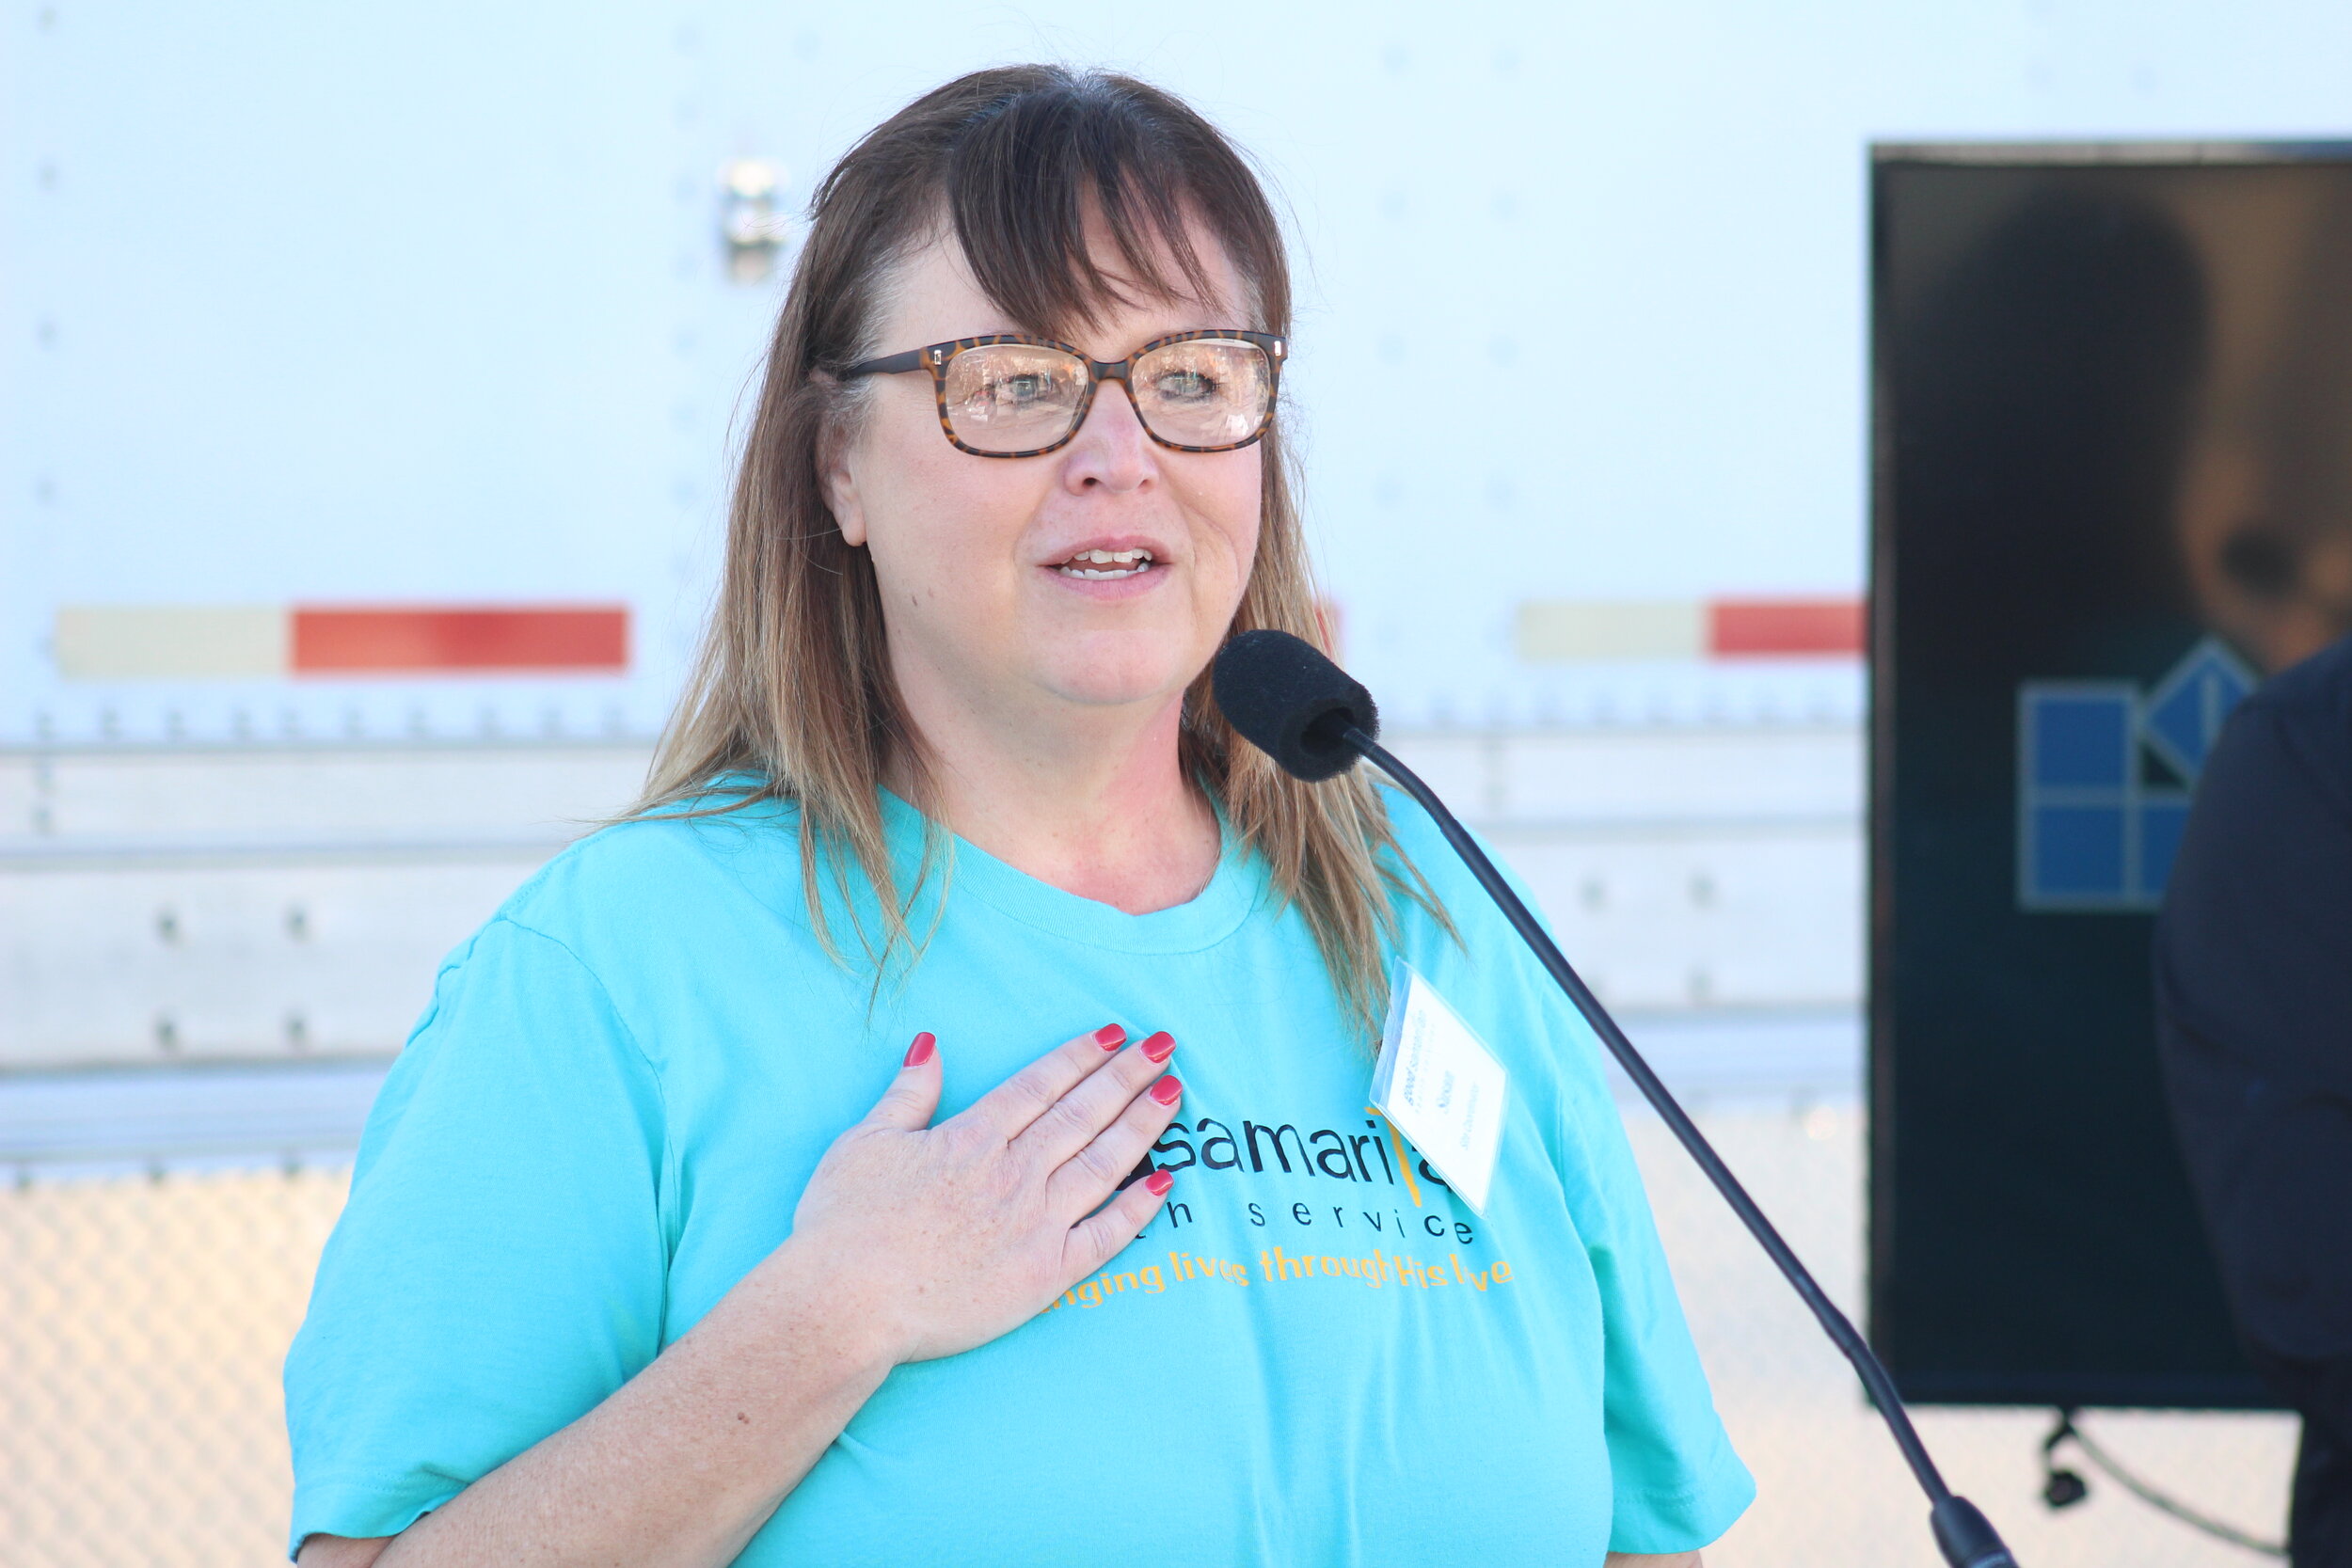  Site Coordinator Susan Hood speaks at the grand opening of the Sand Springs Good Samaritan Health Clinic. 